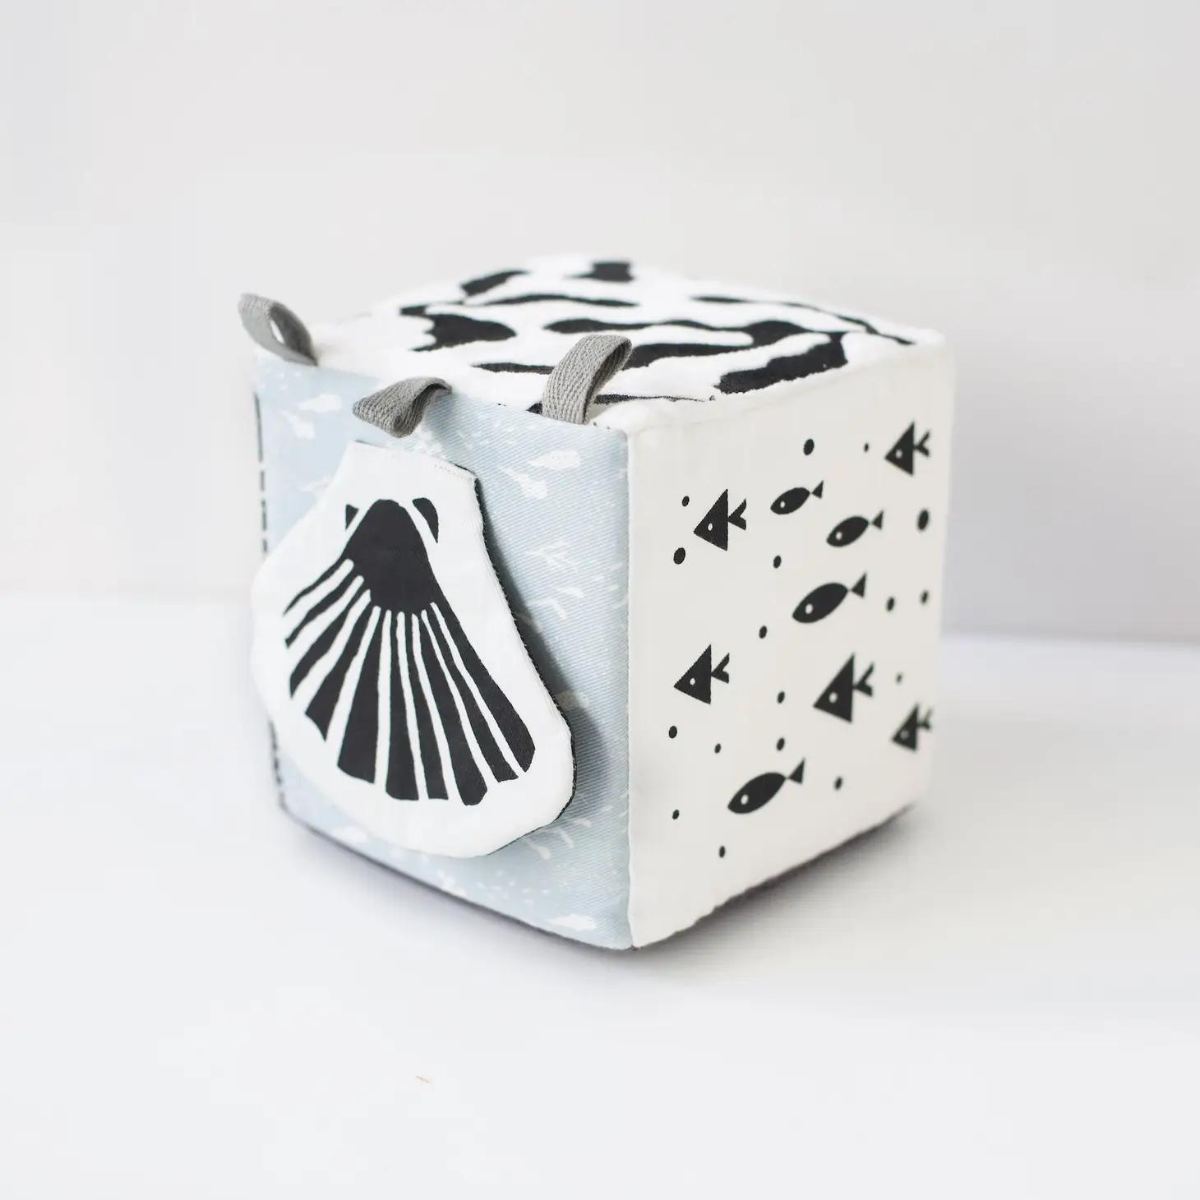 WEE GALLERY – Cube sensorielle océan noir et blanc